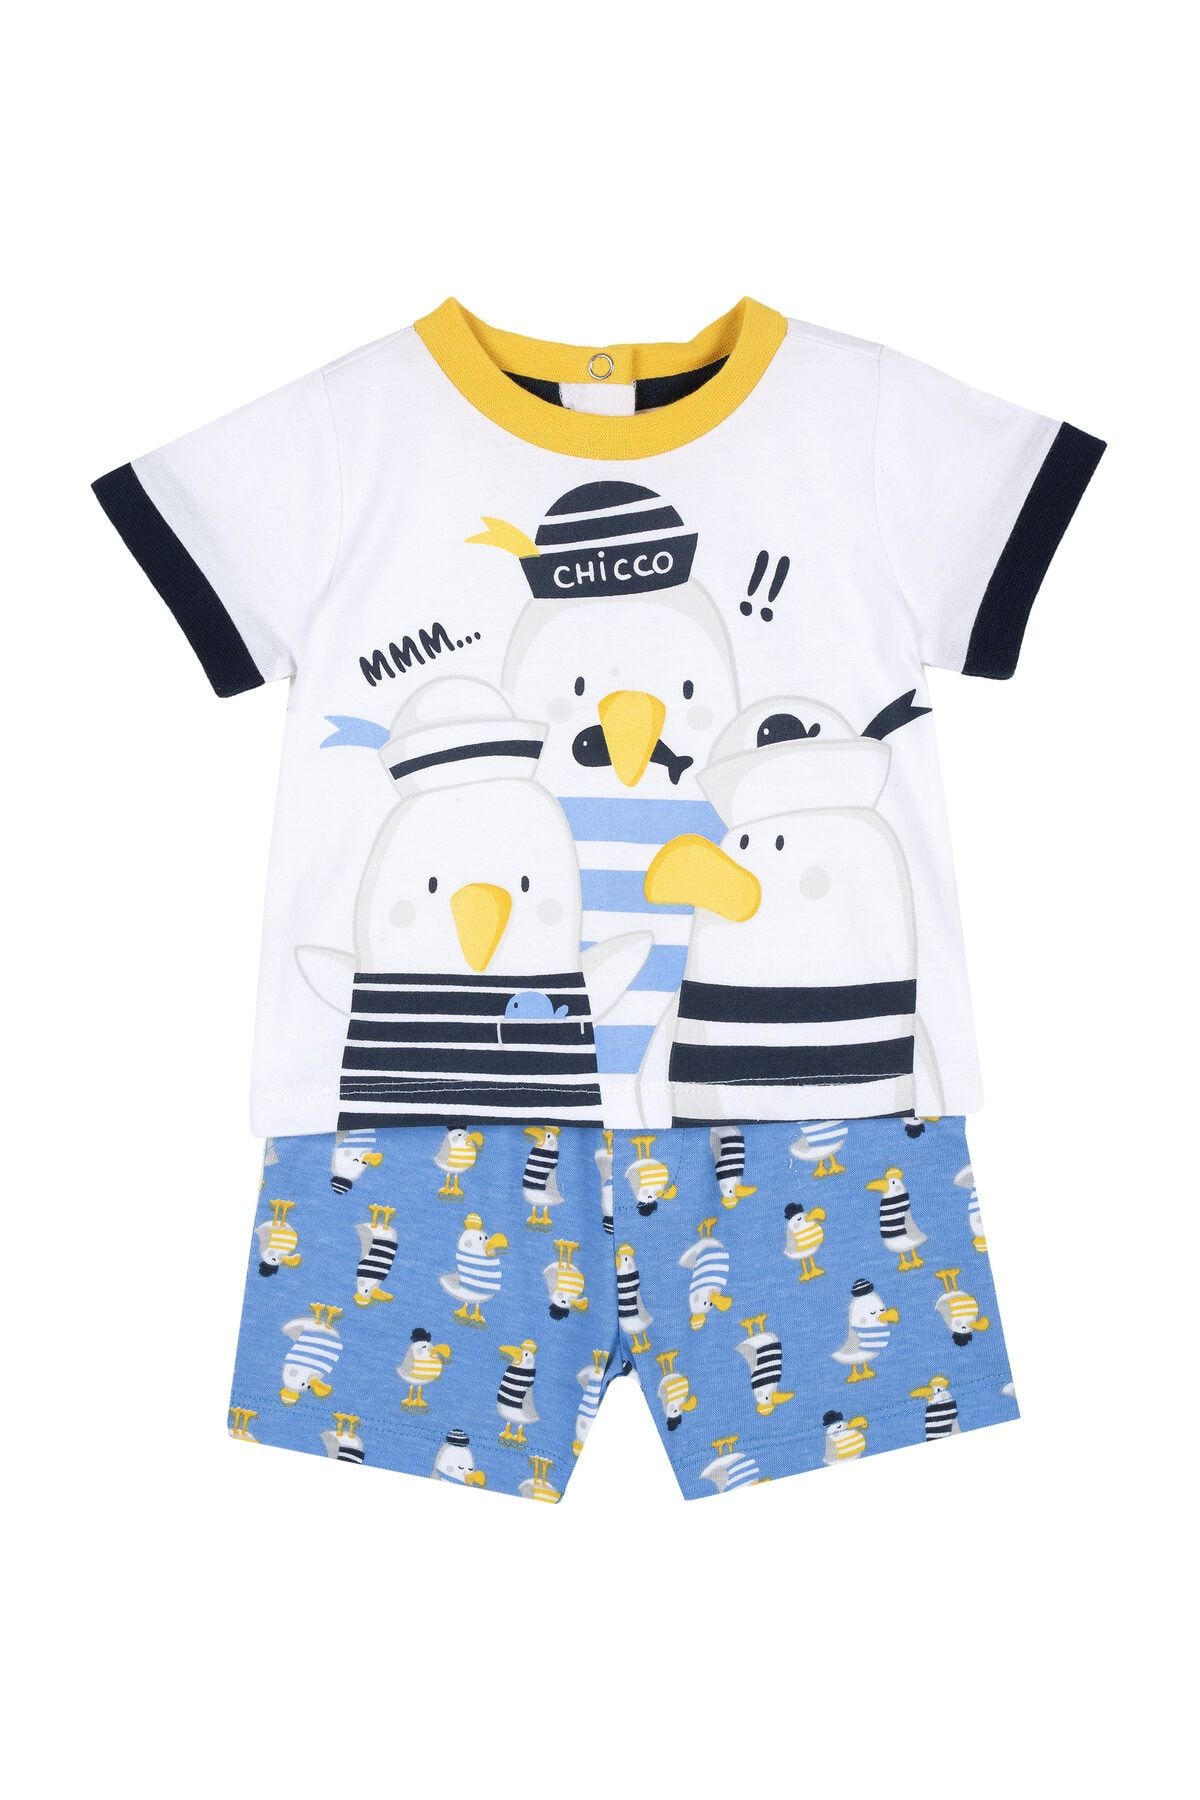 Chicco Erkek Bebek T-Shirt Ve Pantolonlu 2' Li Mavi Takım